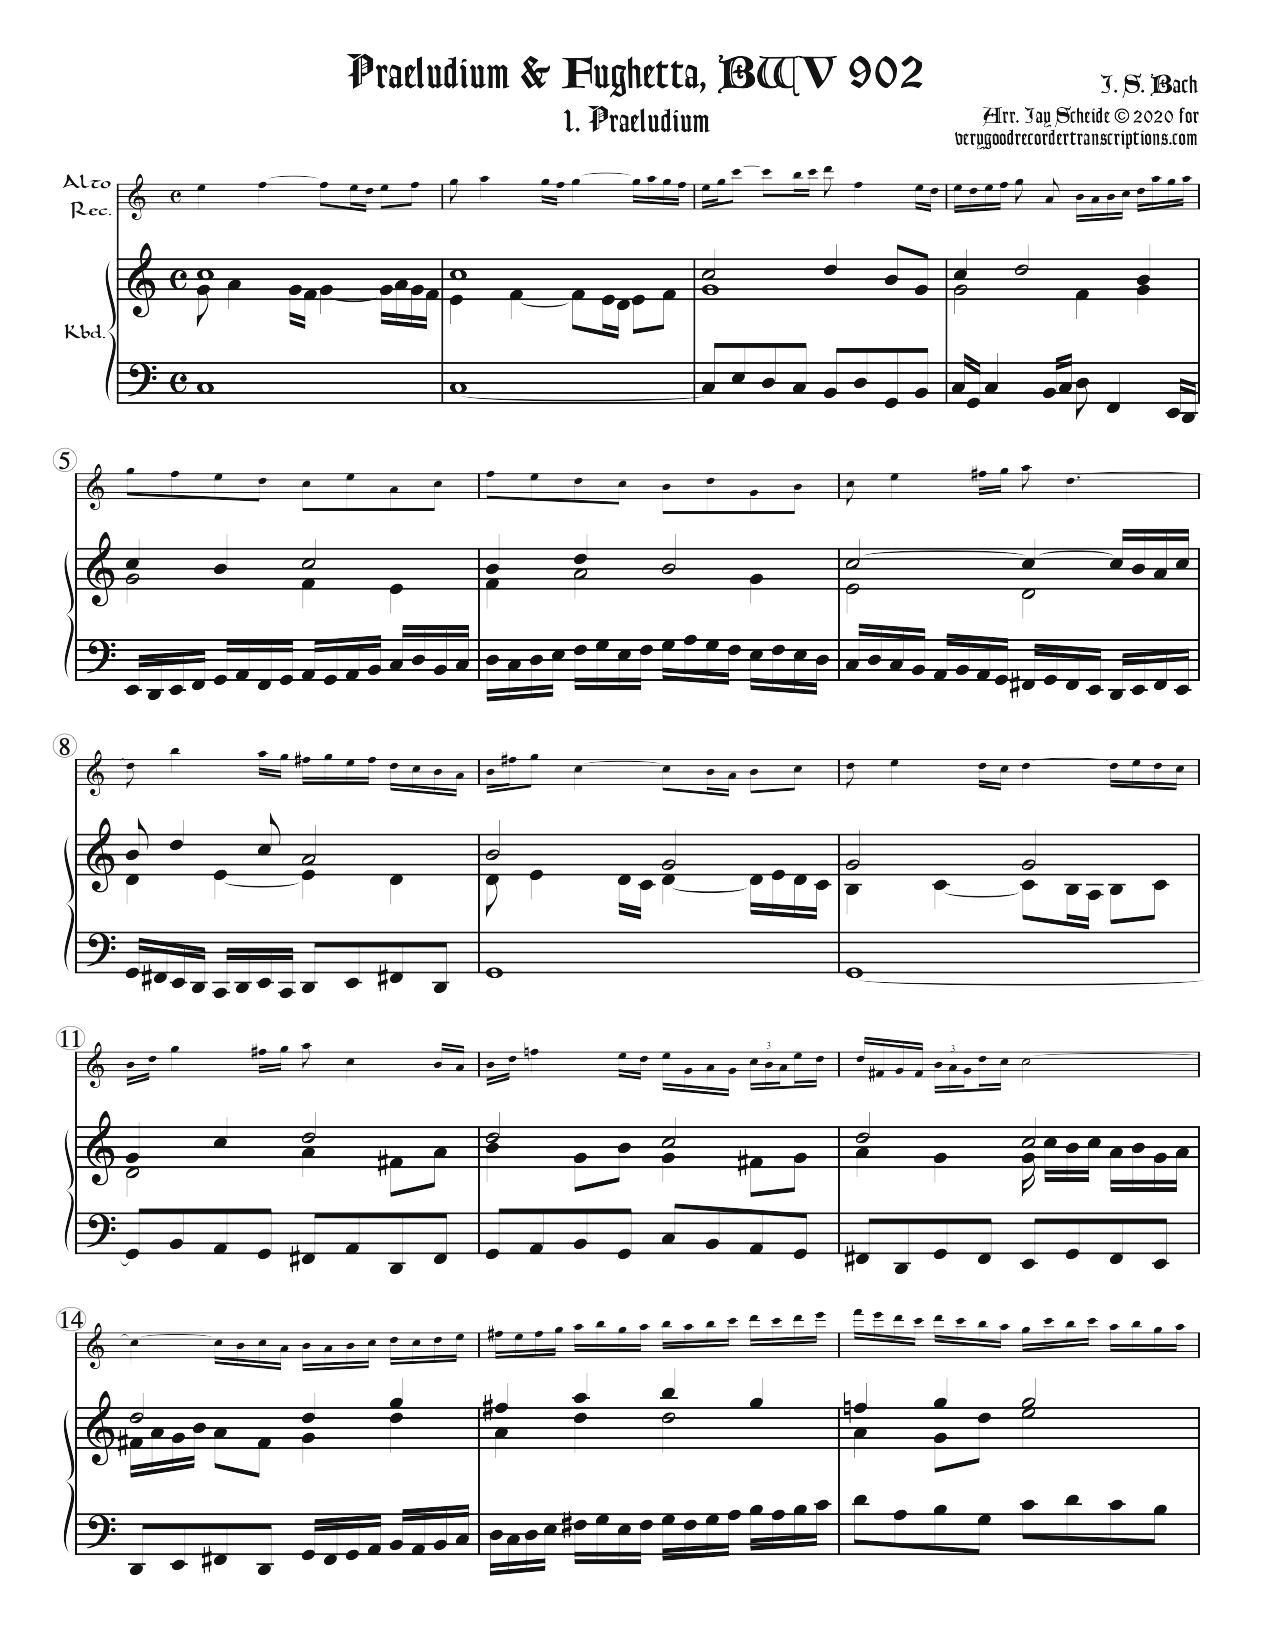 Præludium from BWV 902